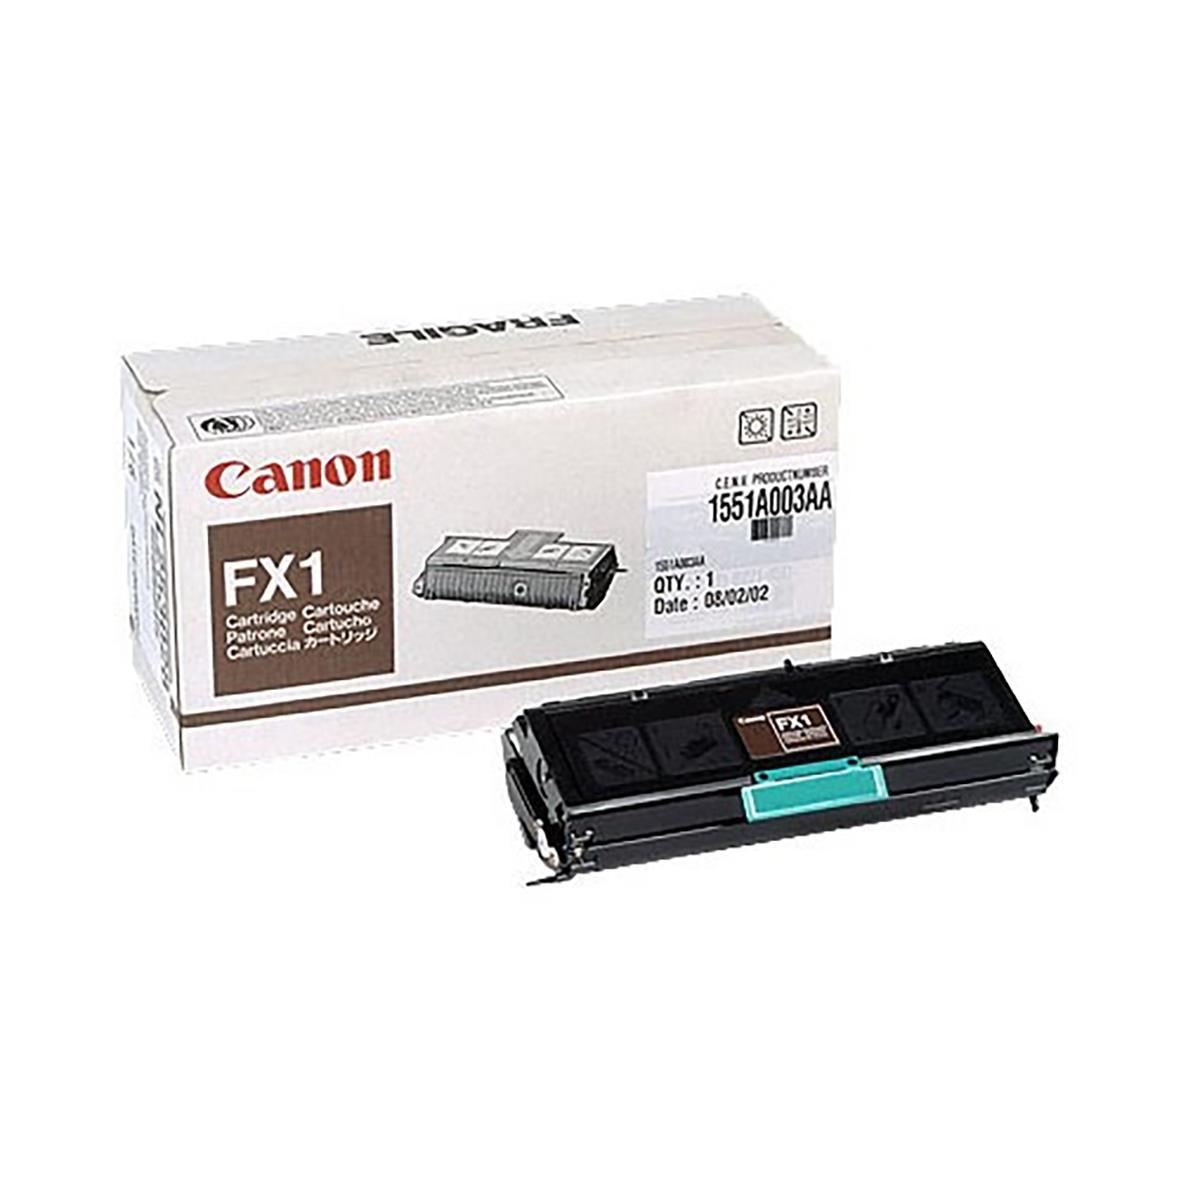 Lasertoner Canon Fx-1 27041921